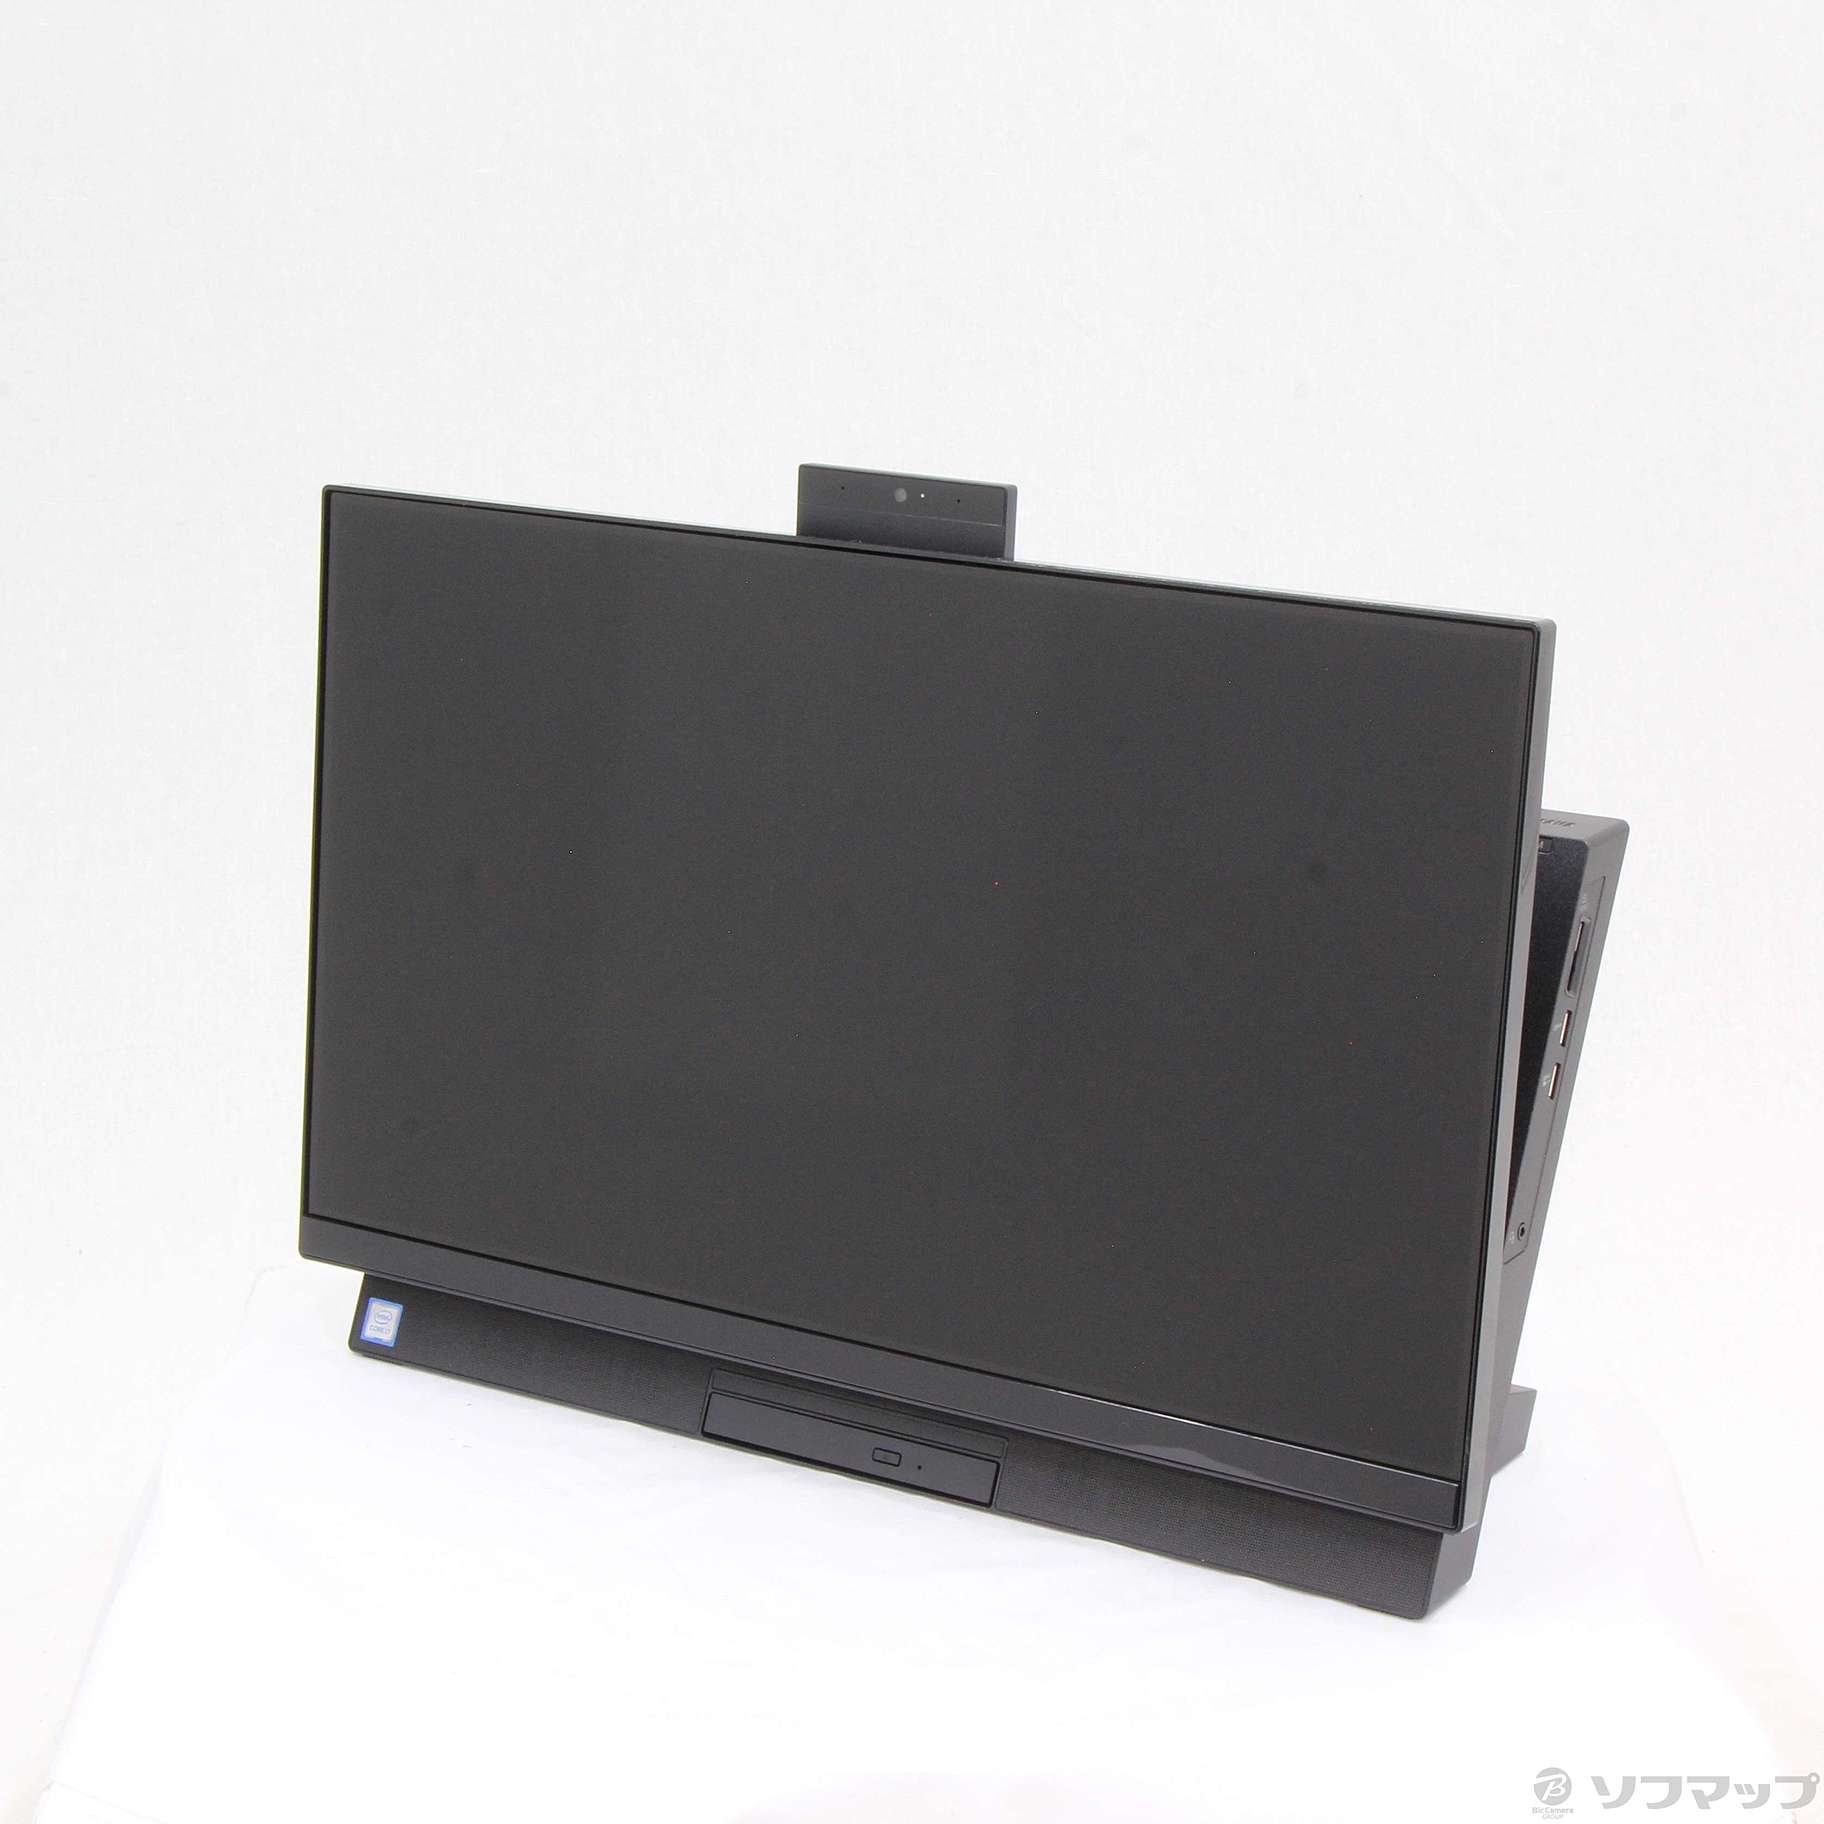 LAVIE Desk All-in-one PC-DA600MAB3 ファインブラック 〔NEC Refreshed PC〕 〔Windows 10〕  ≪メーカー保証あり≫